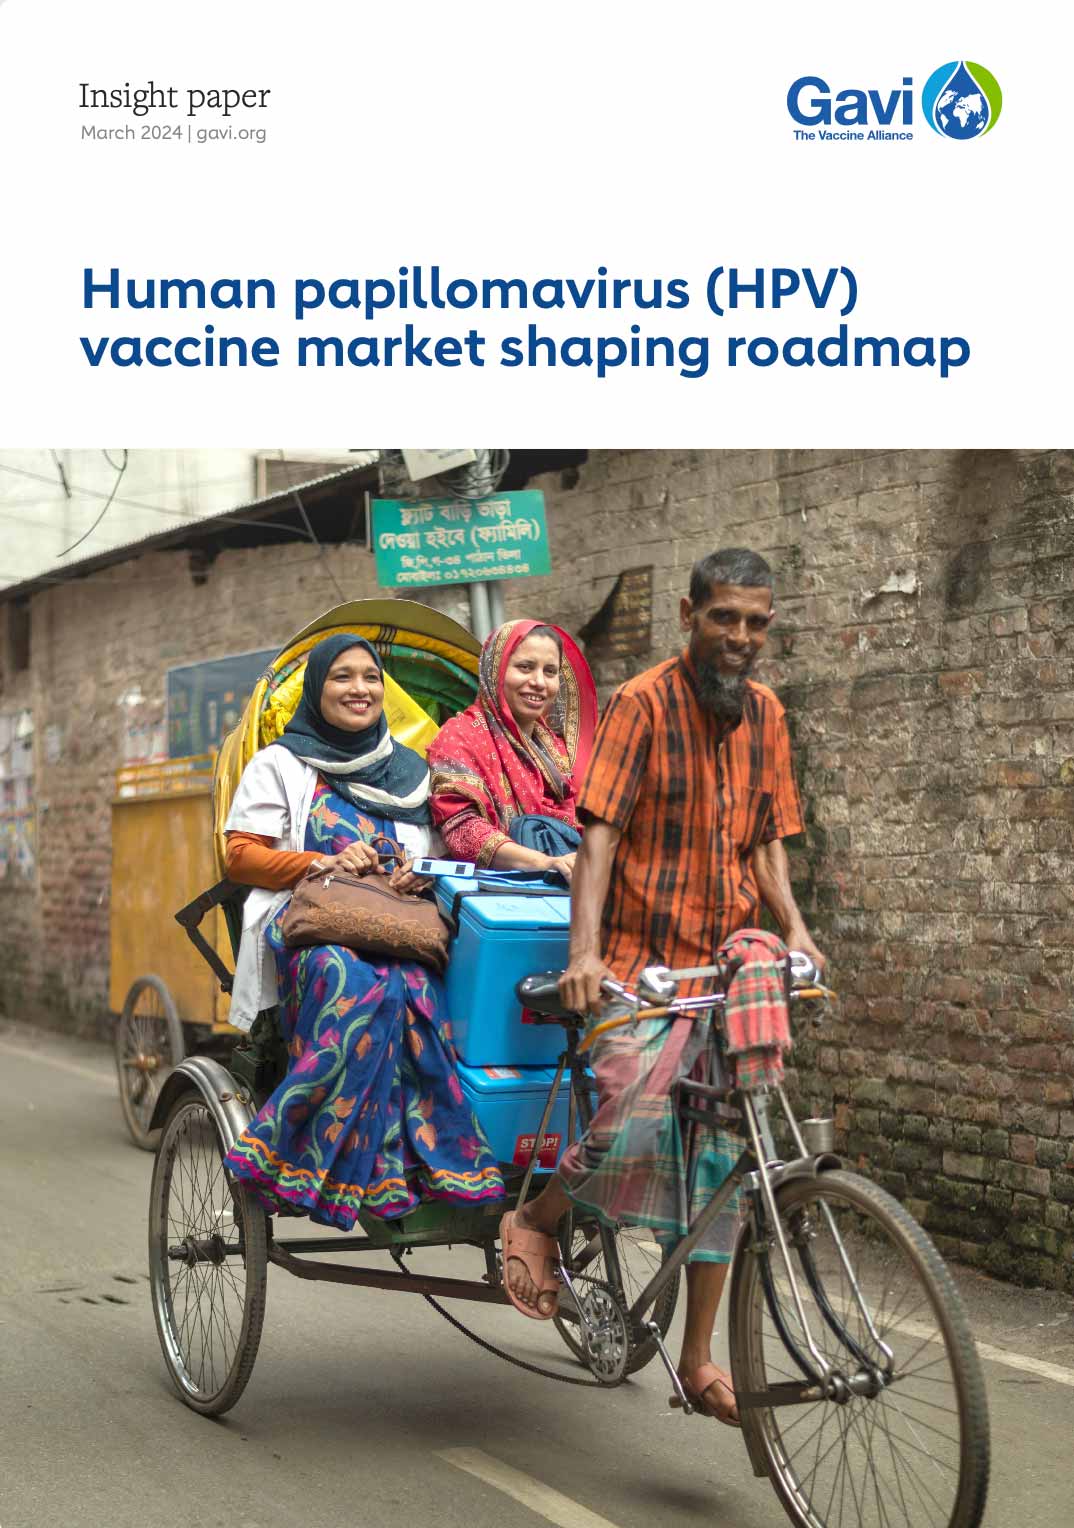 Human papillomavirus (HPV) vaccine market shaping roadmap